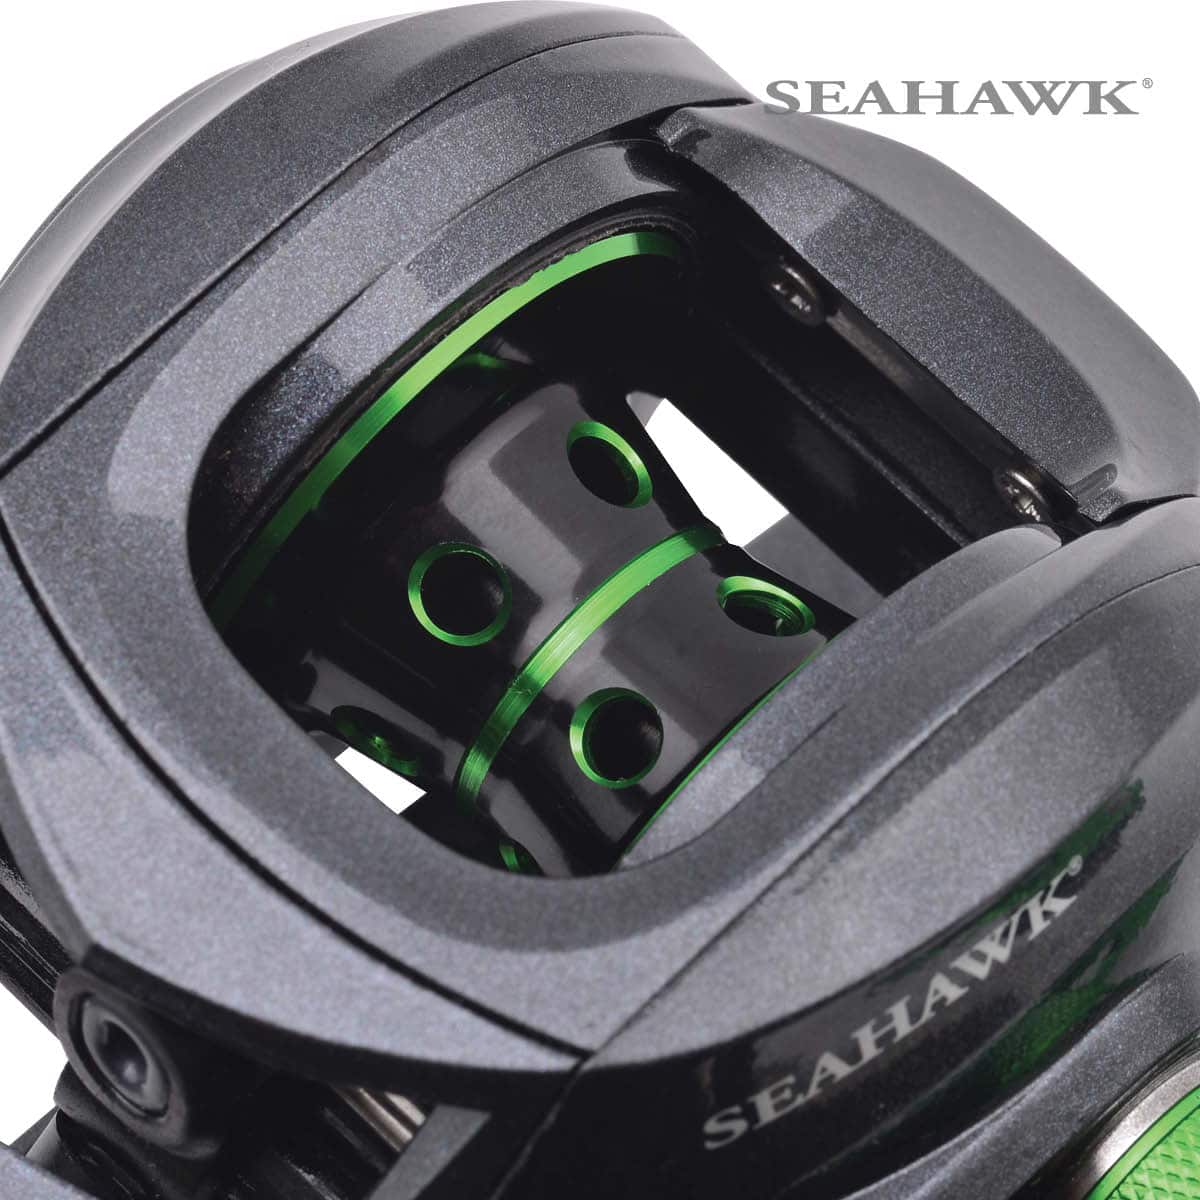 seahawk-stinger-x-09